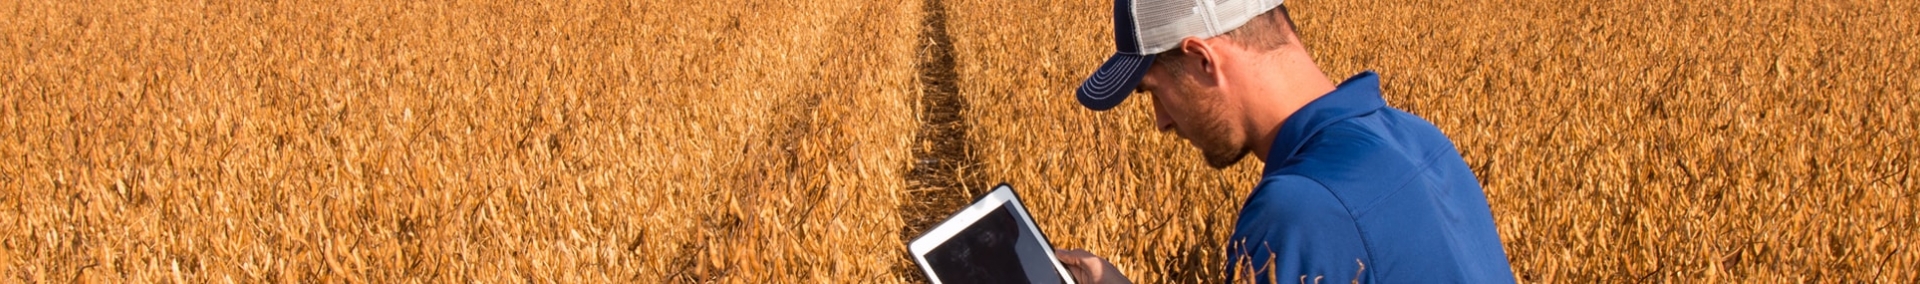 Soybean field with farmer on tablet